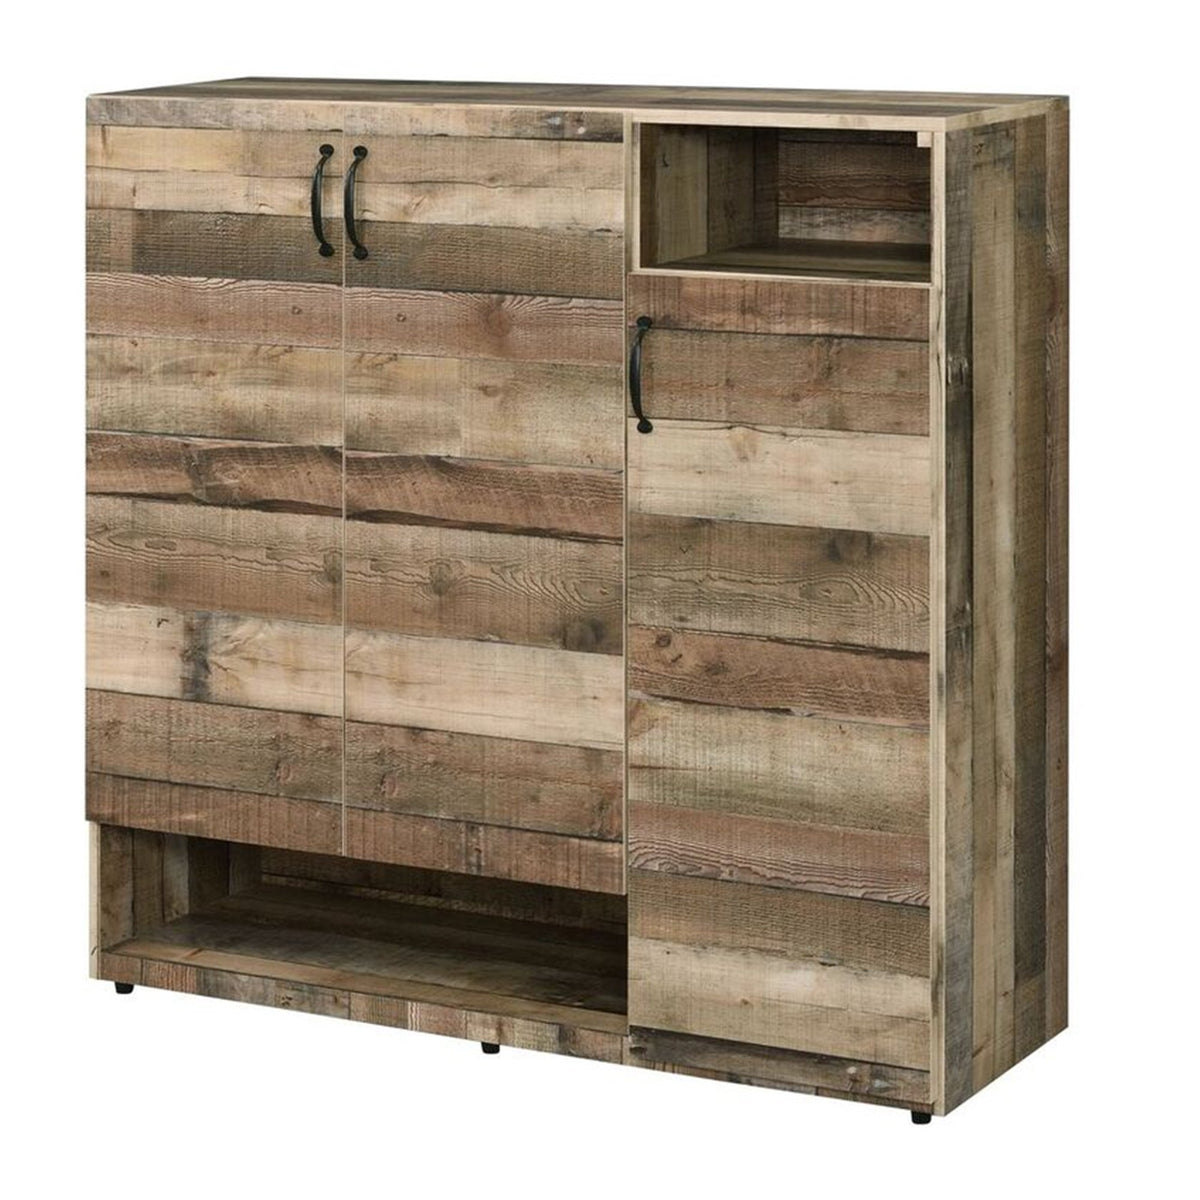 3 Door Wooden Shoe Cabinet with Multiple Storage Compartments in Brown - BM211131